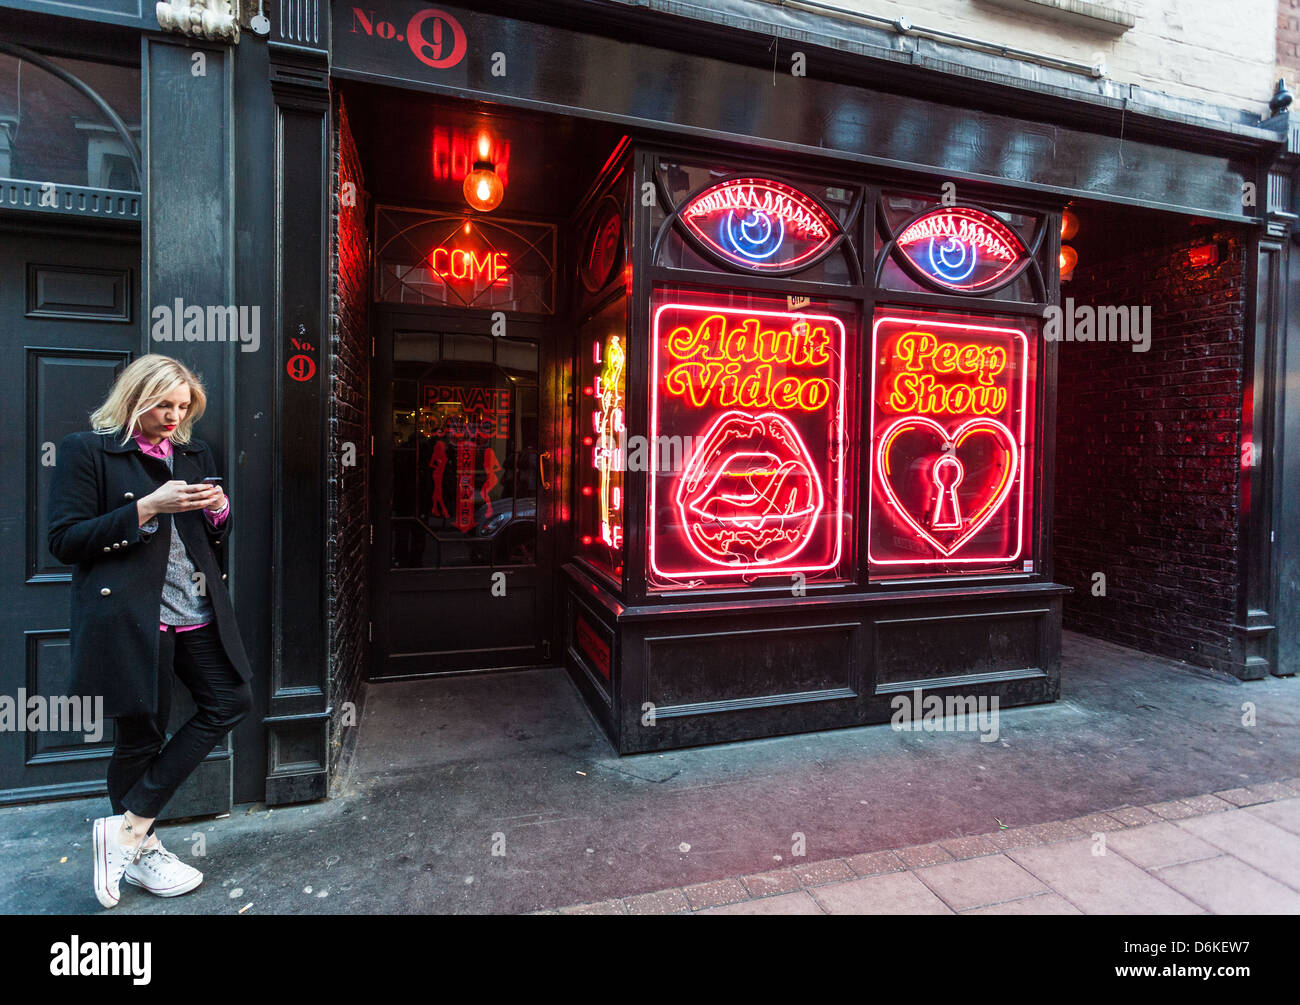 La Bodega Negra, ein mexikanisches Restaurant und Bar, irreführende shopfront, Soho, London, England, UK. Stockfoto